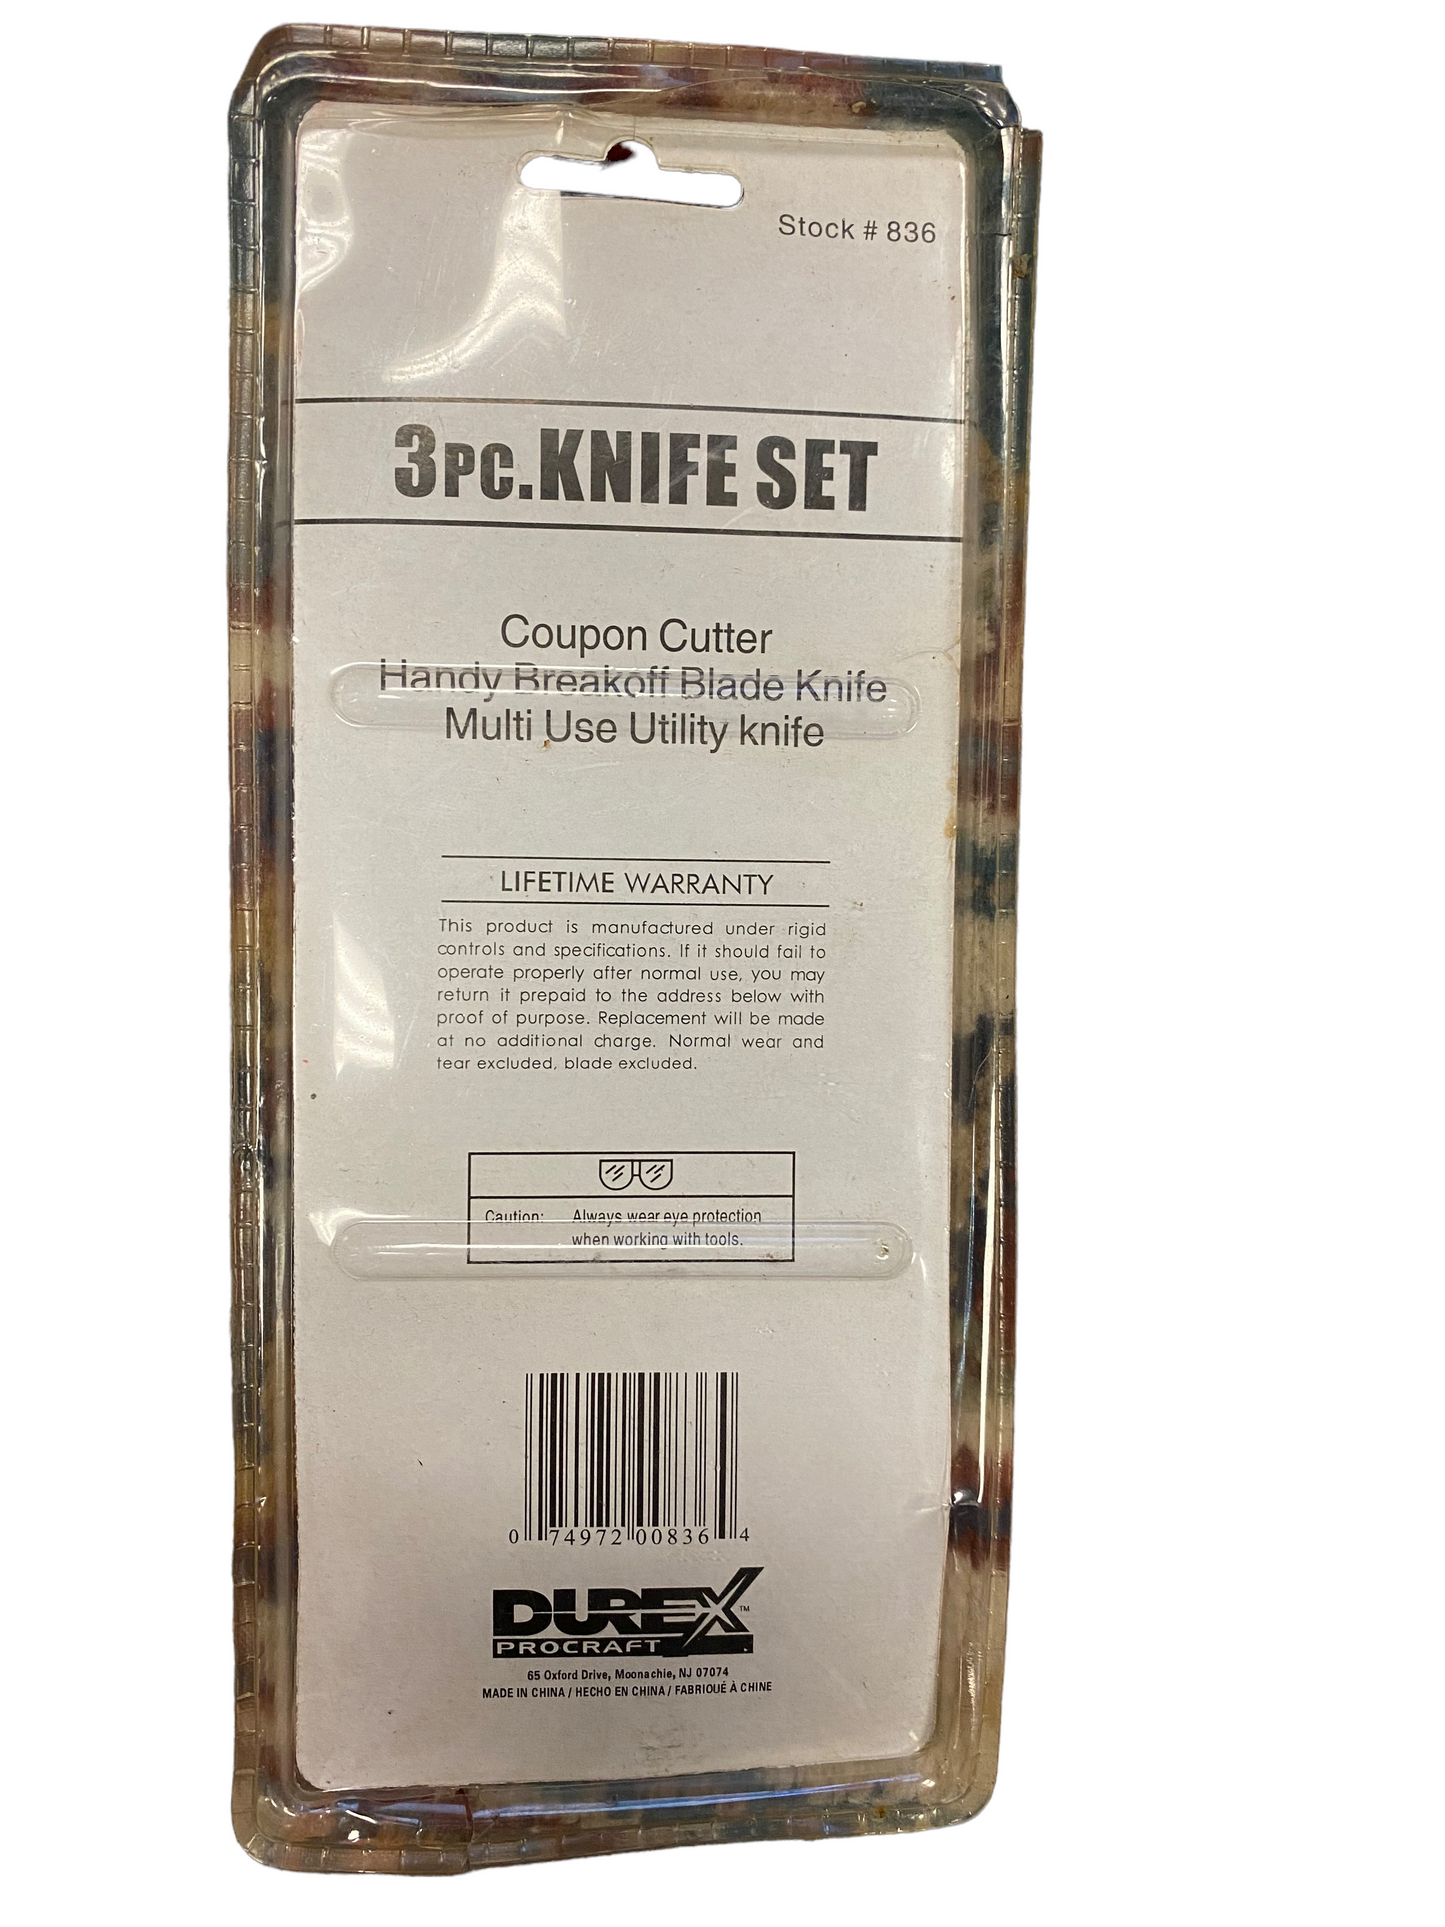 Durex Procraft 3pc Knife Set. Coupon Cutter.